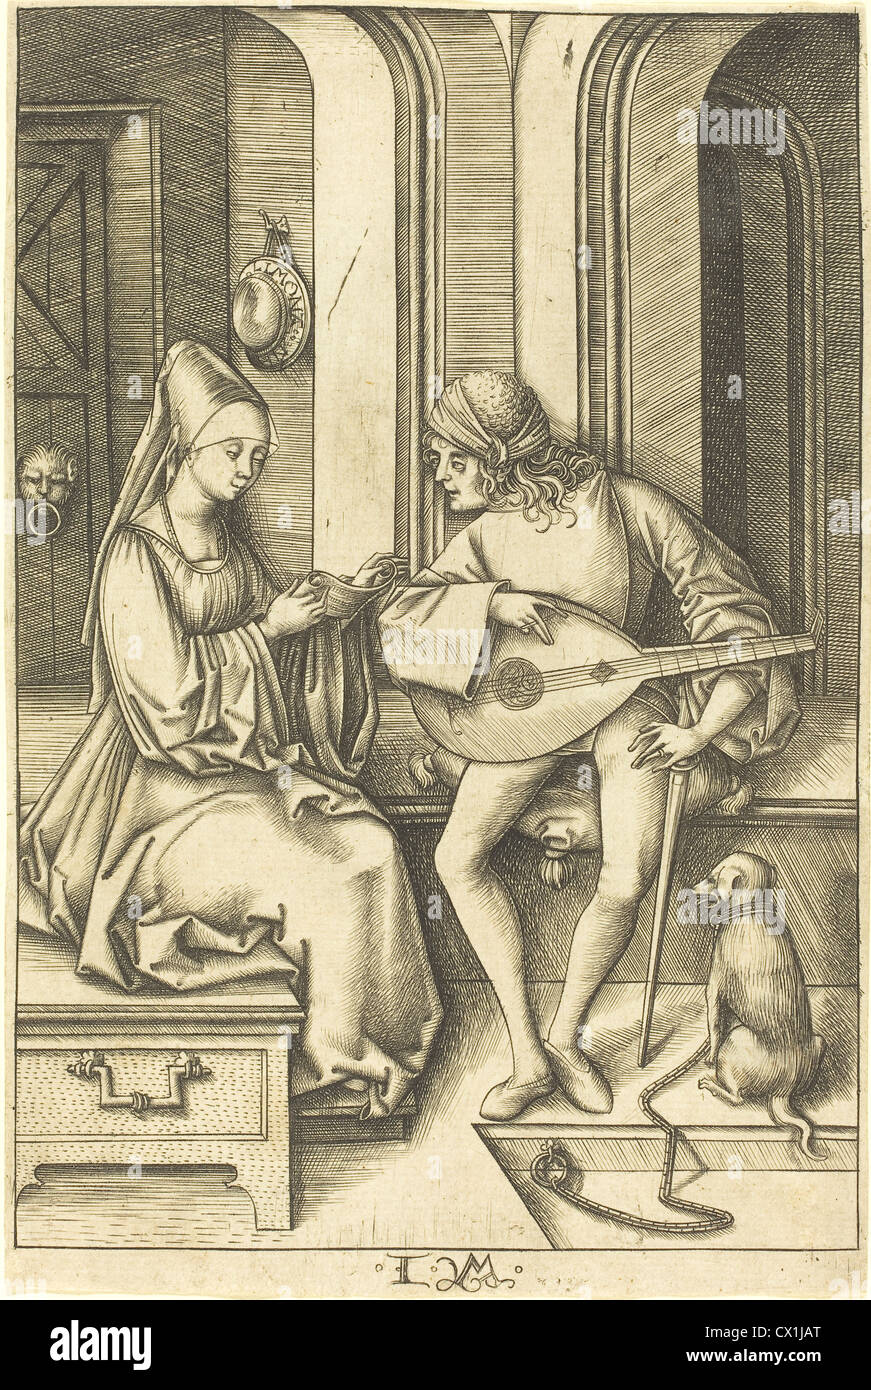 Israhel van Meckenem (German, c. 1445 - 1503 ), The Lute Player and the Singer, c. 1495/1503, engraving Stock Photo